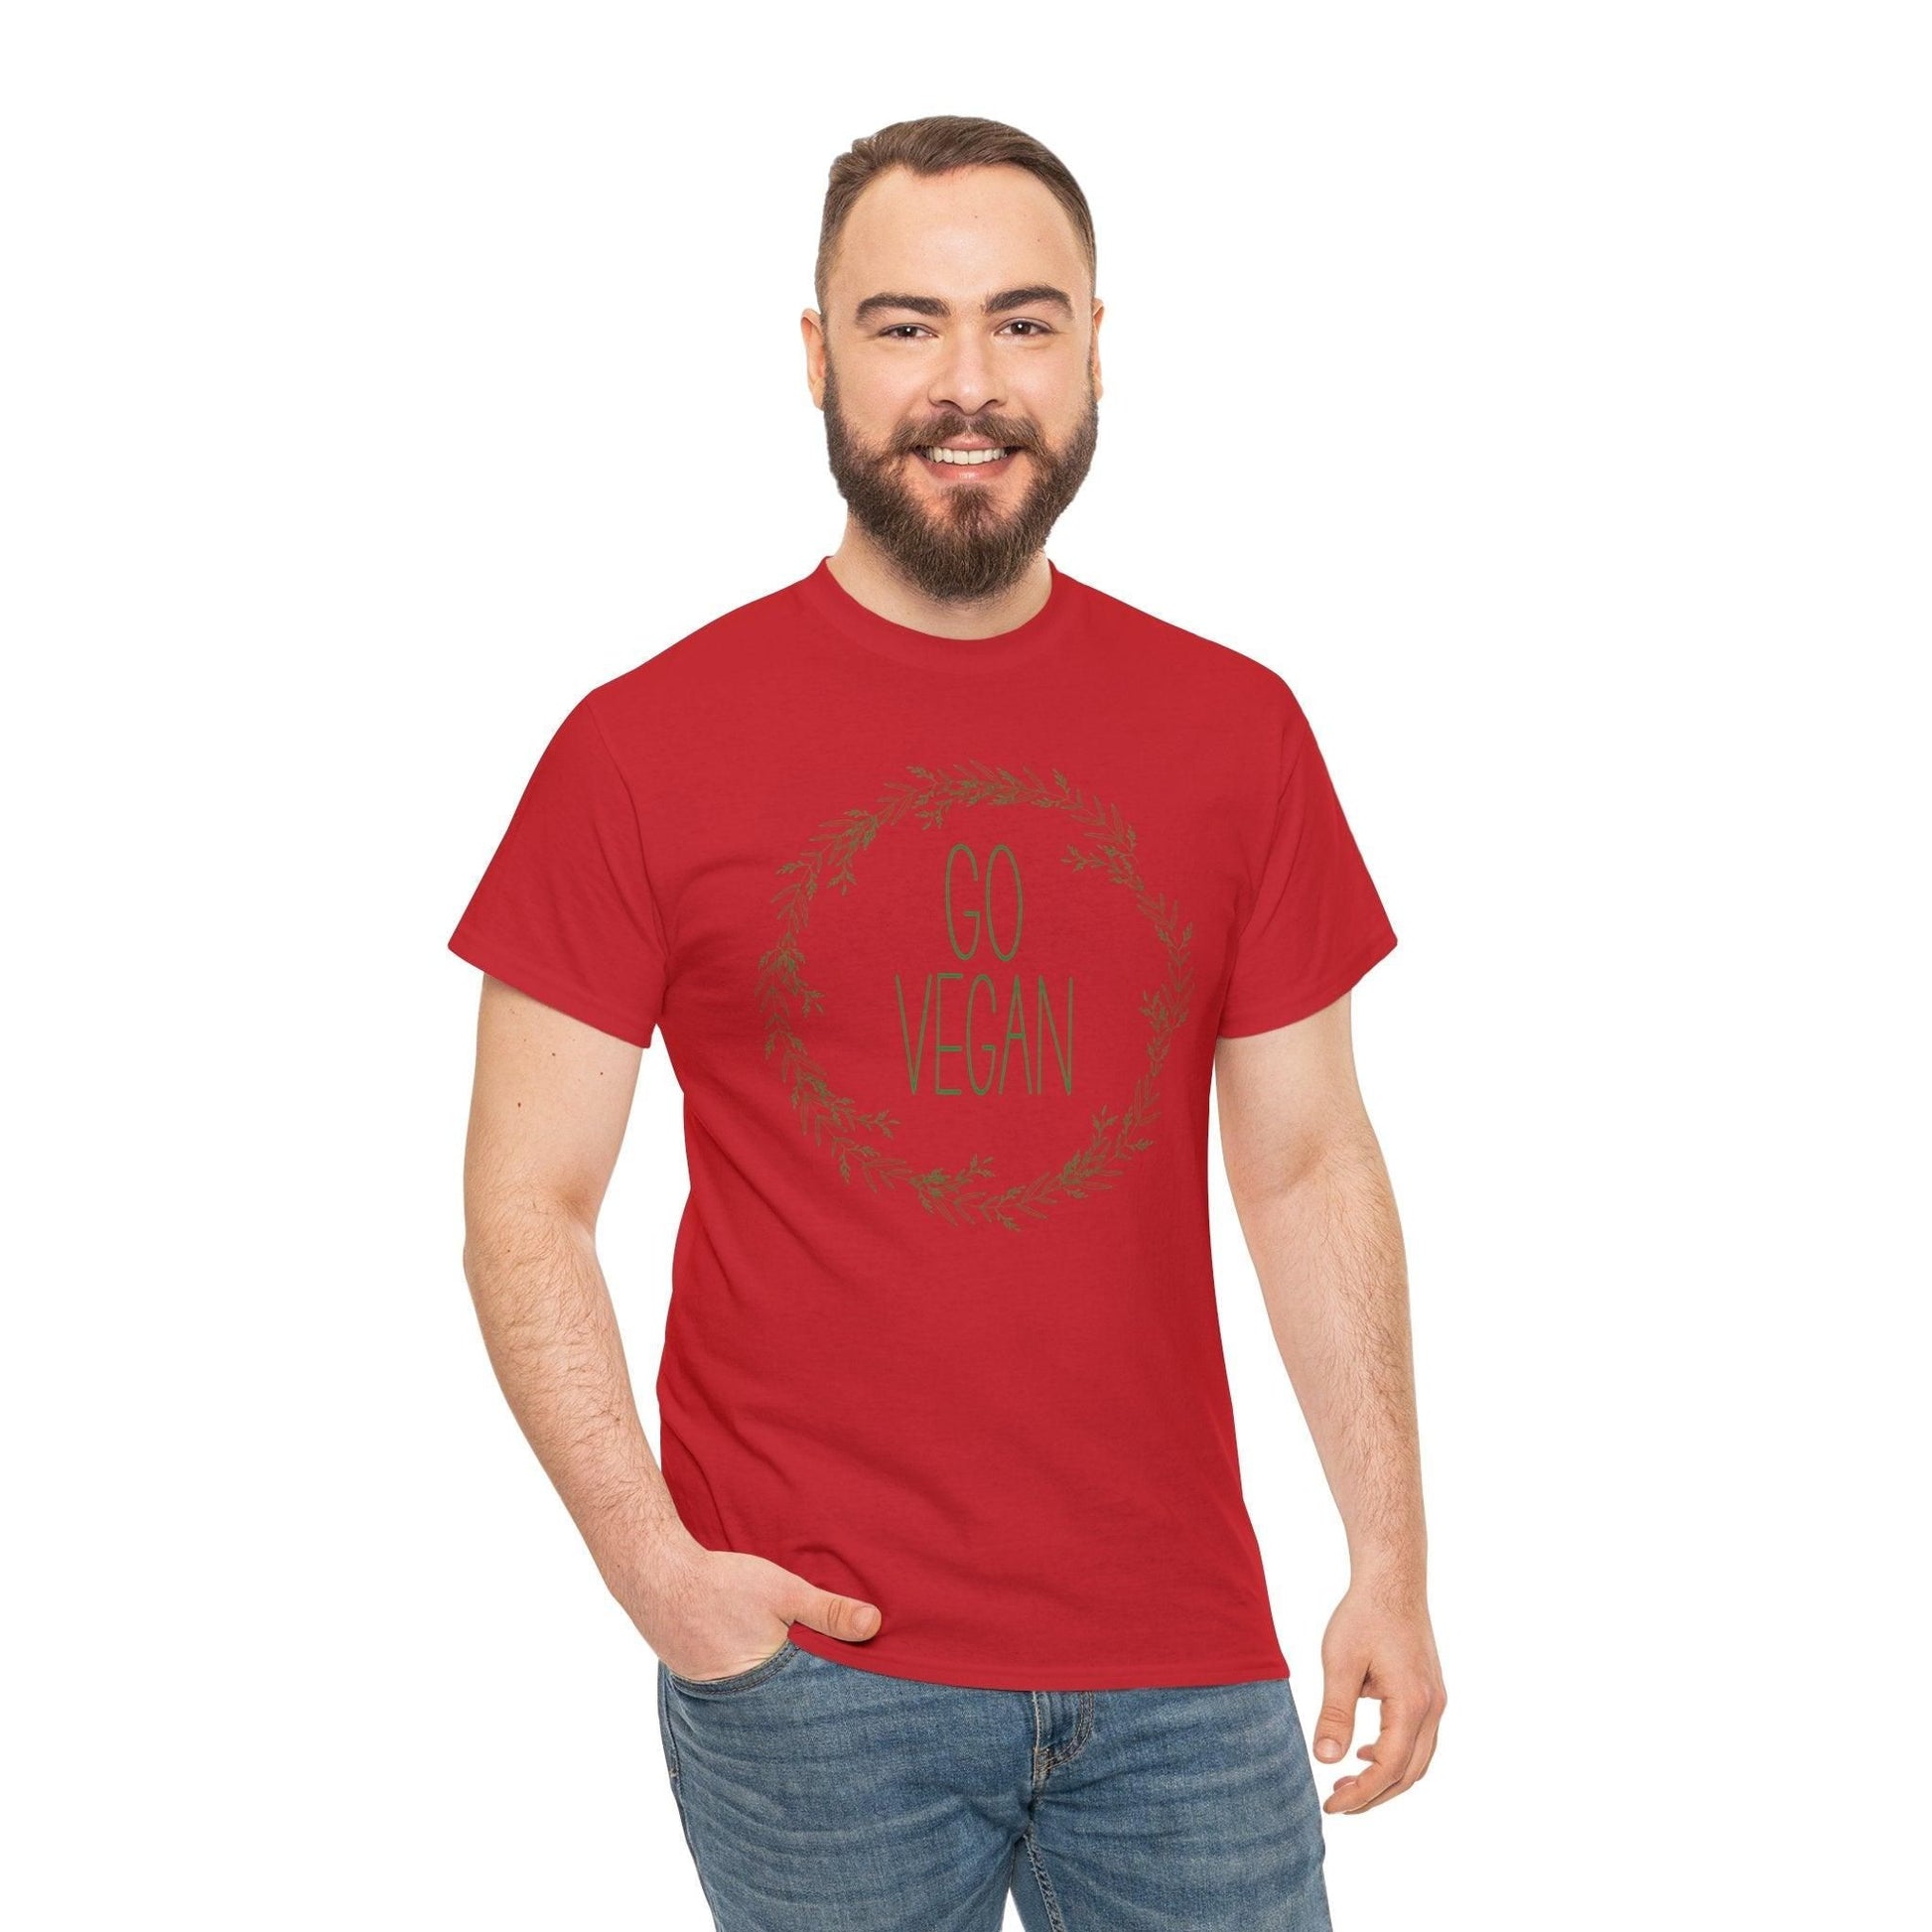 Go Vegan Unisex Tee T-Shirt Red S 